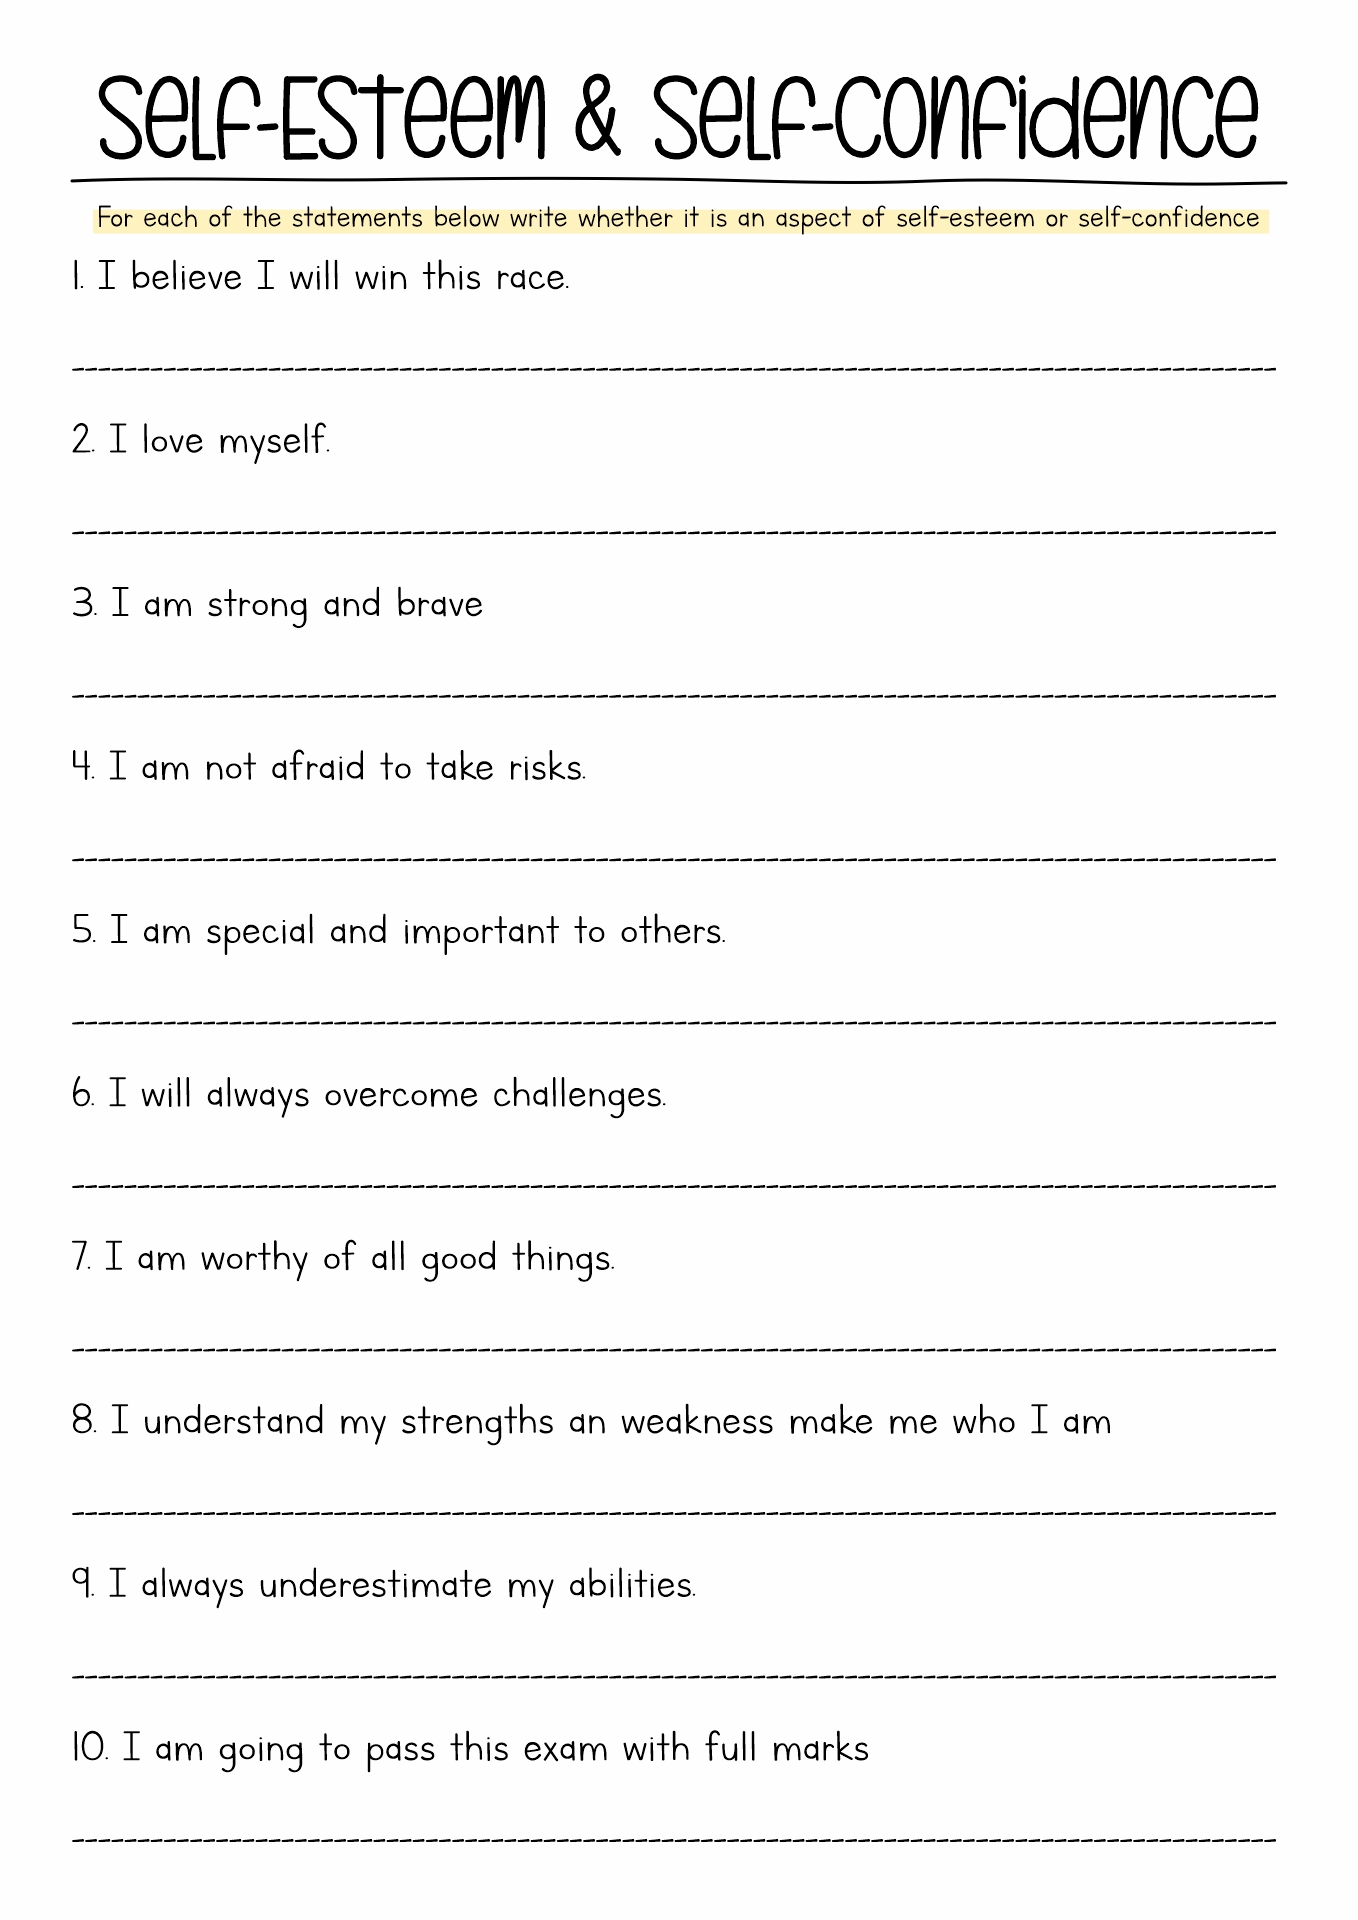 Self-Confidence Worksheets Image